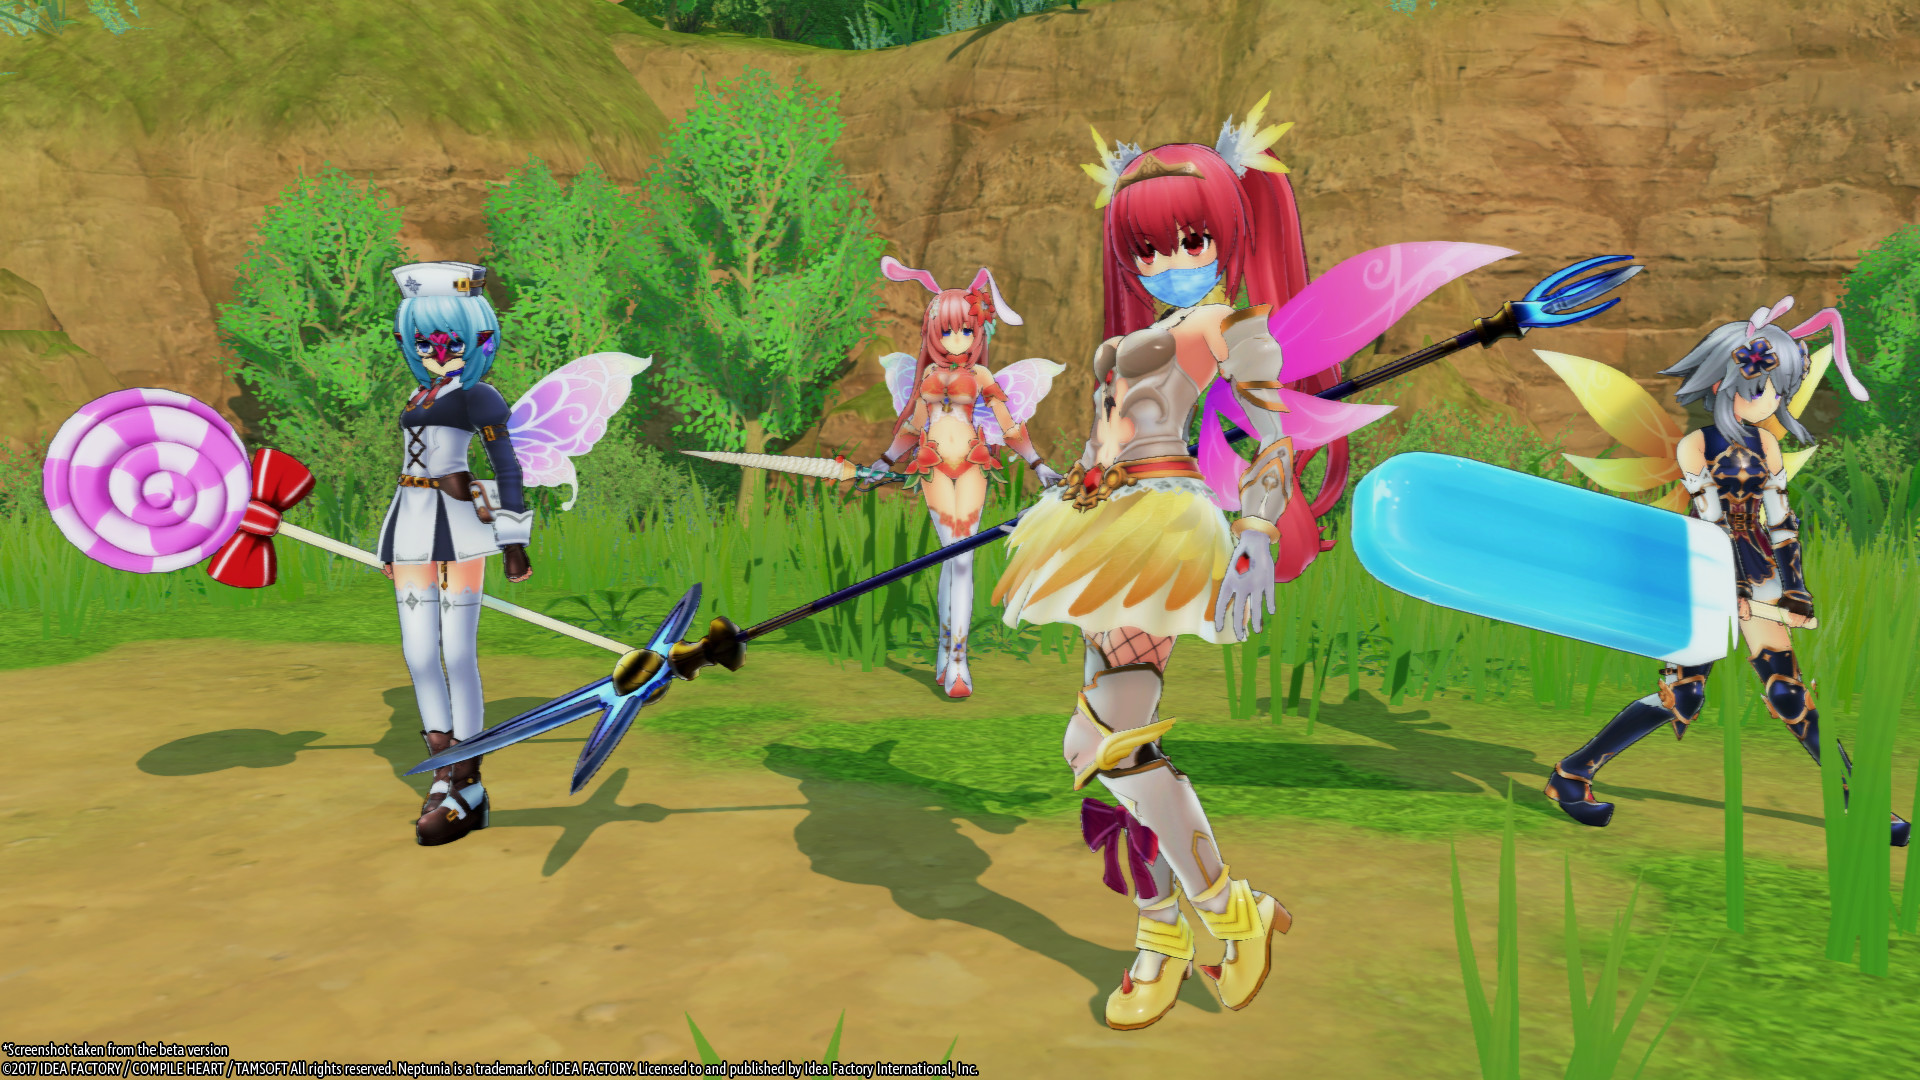  Cyberdimension Neptunia: 4 Goddesses Online (PS4